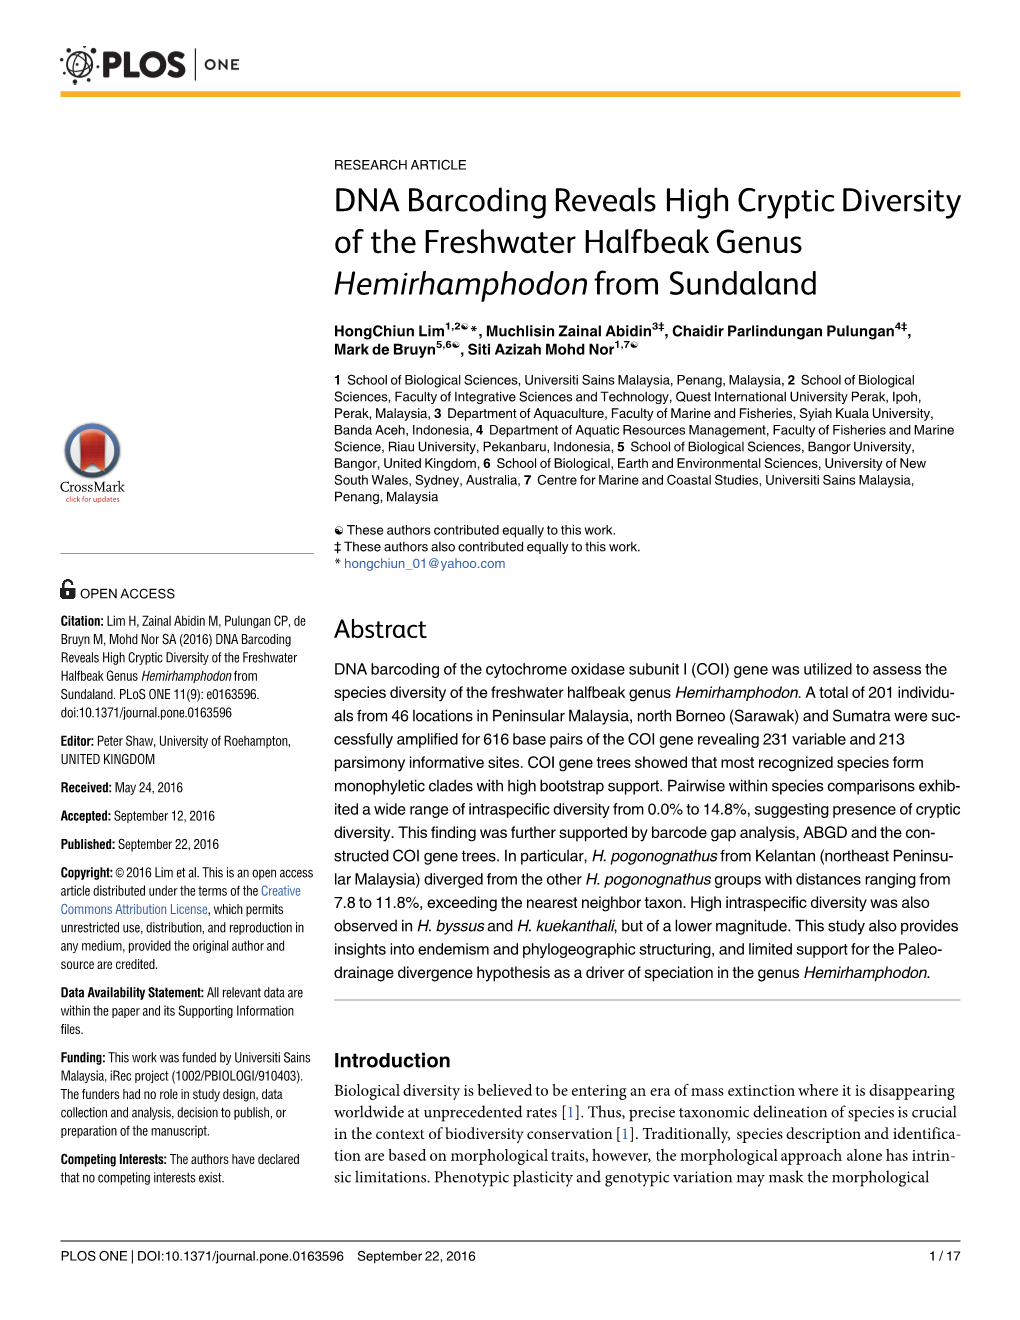 DNA Barcoding Reveals High Cryptic Diversity of the Freshwater Halfbeak Genus Hemirhamphodon from Sundaland